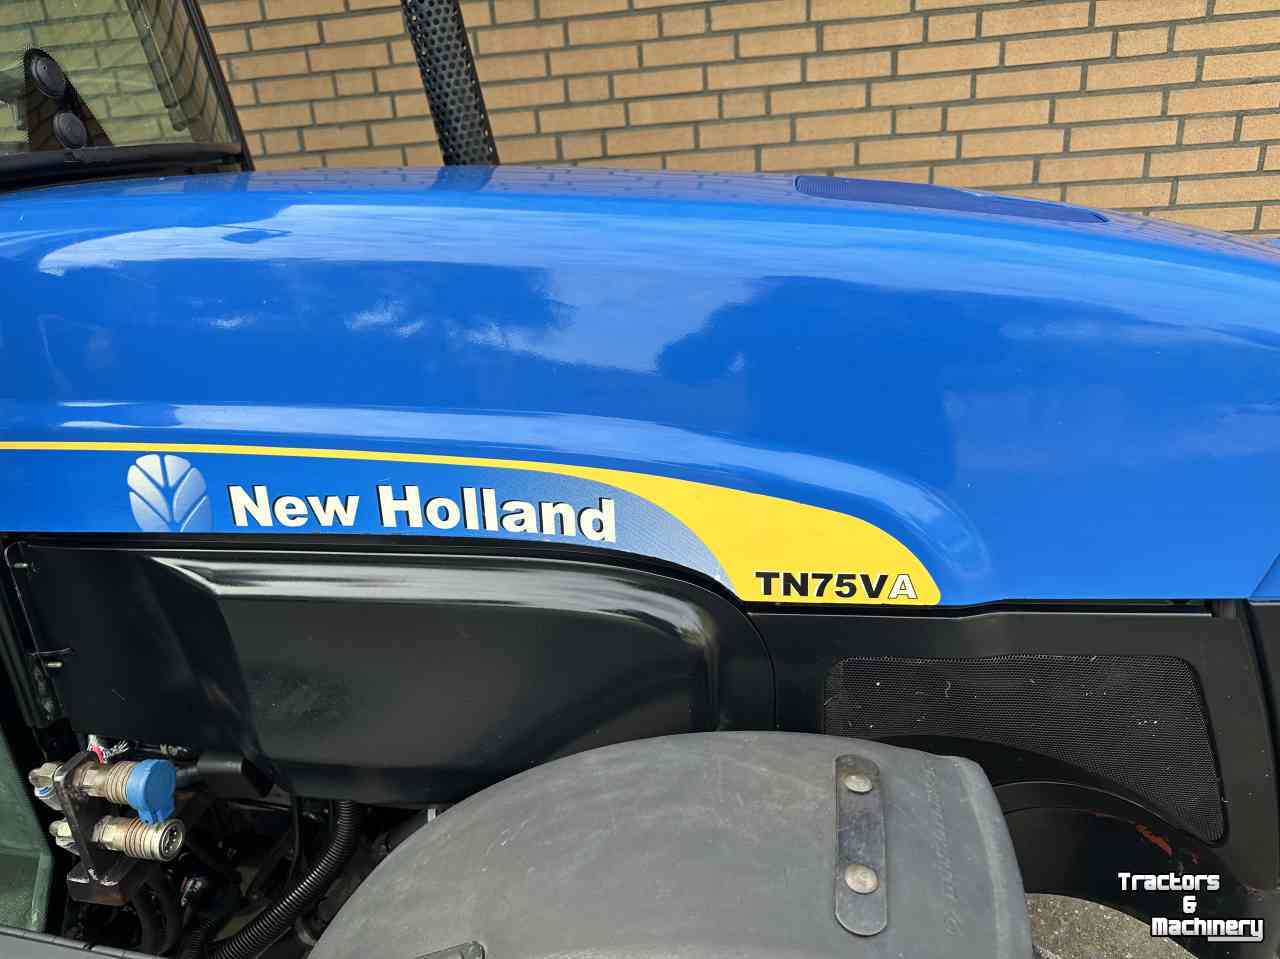 Small-track Tractors New Holland TN75V